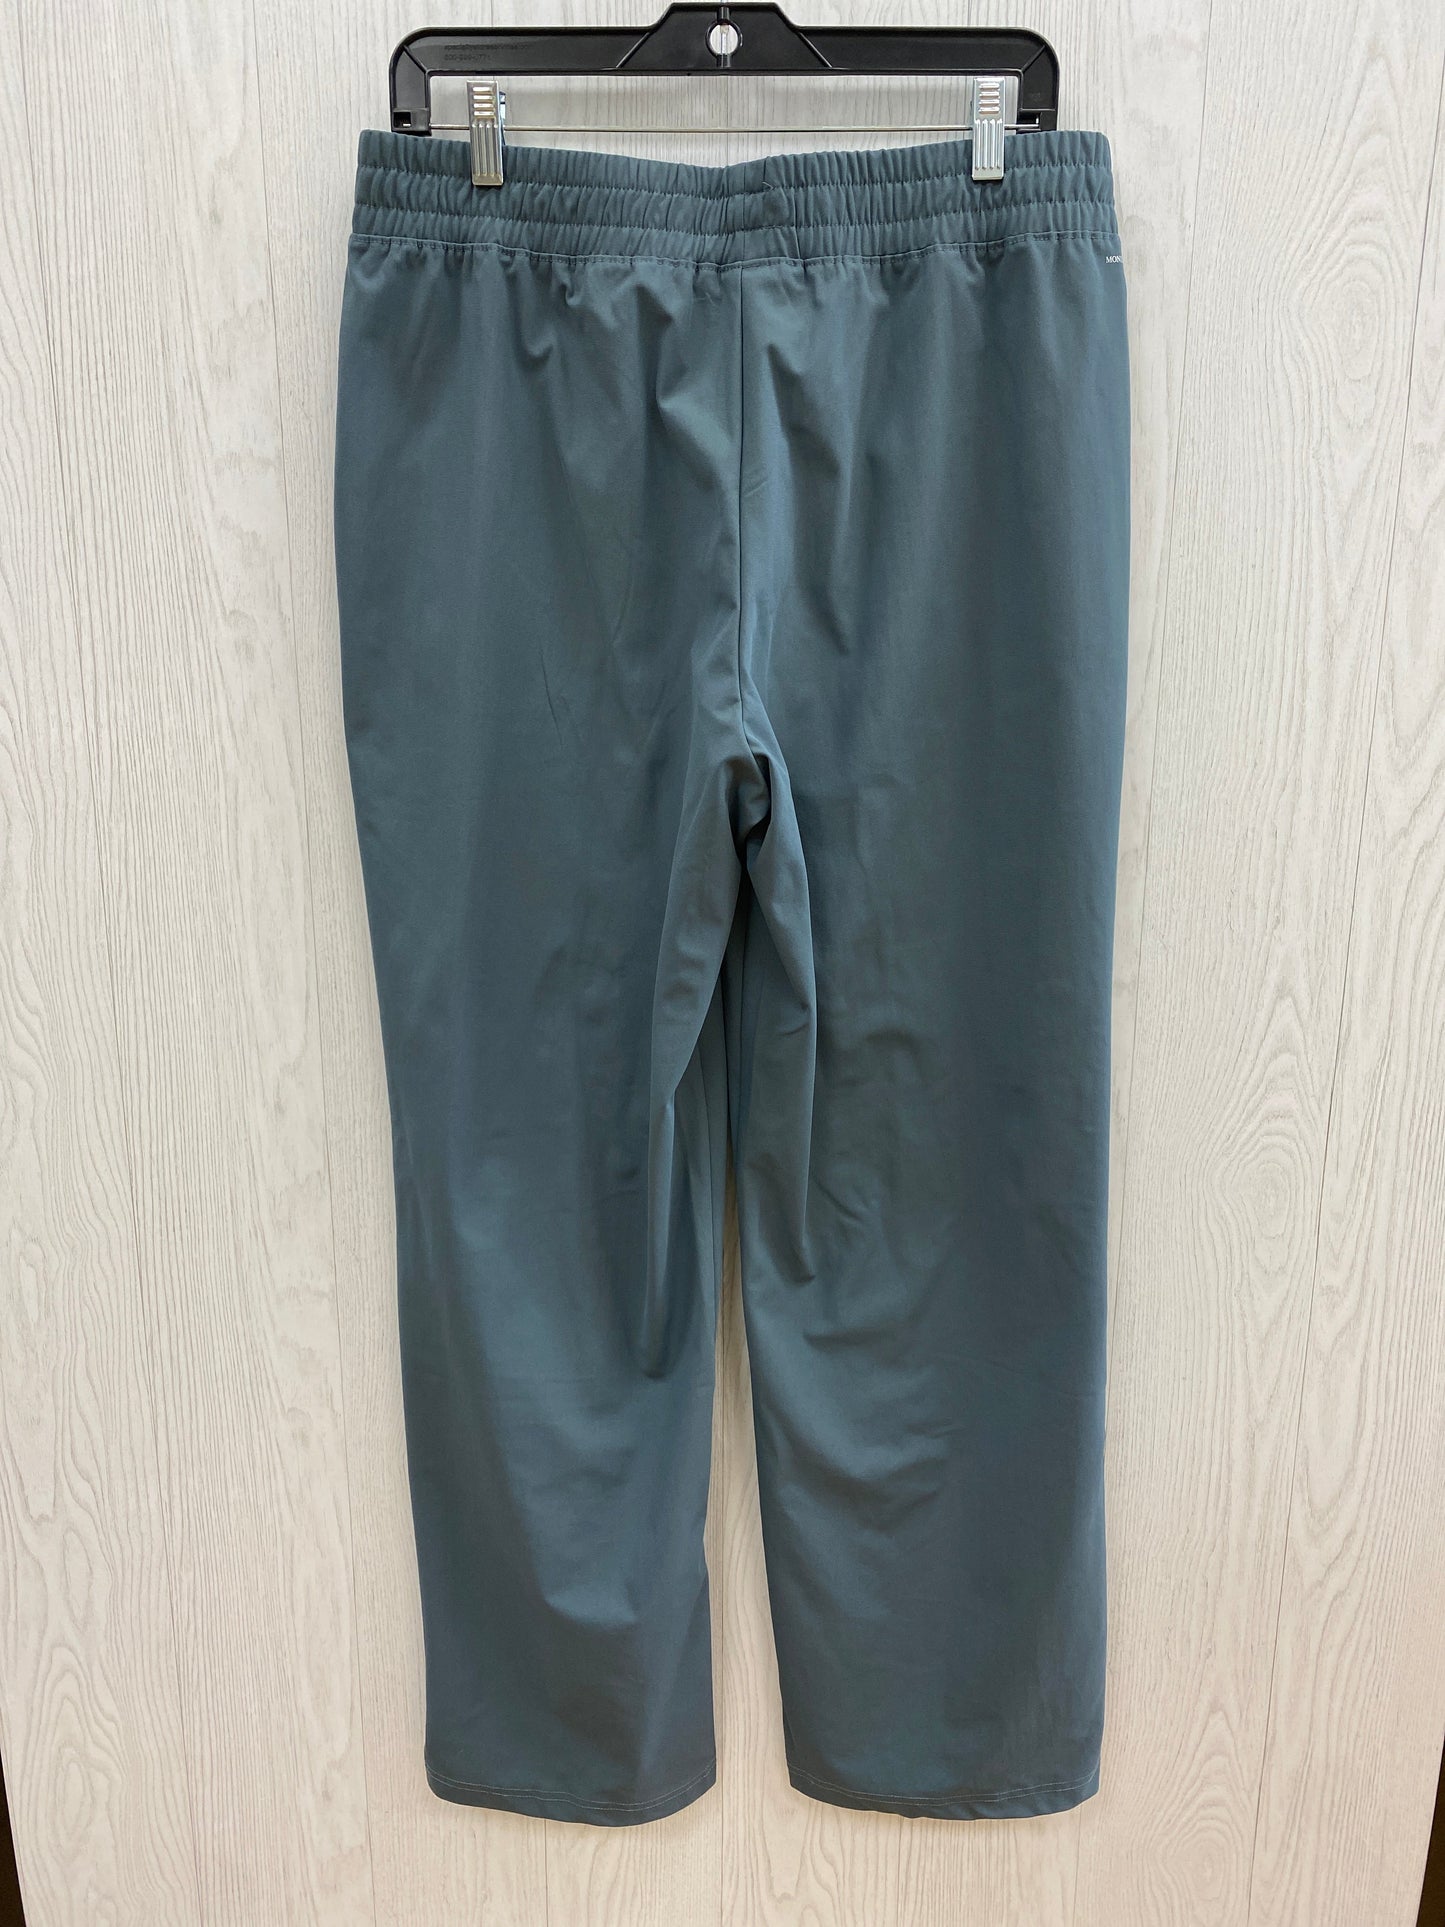 Grey Athletic Pants Mondetta, Size L